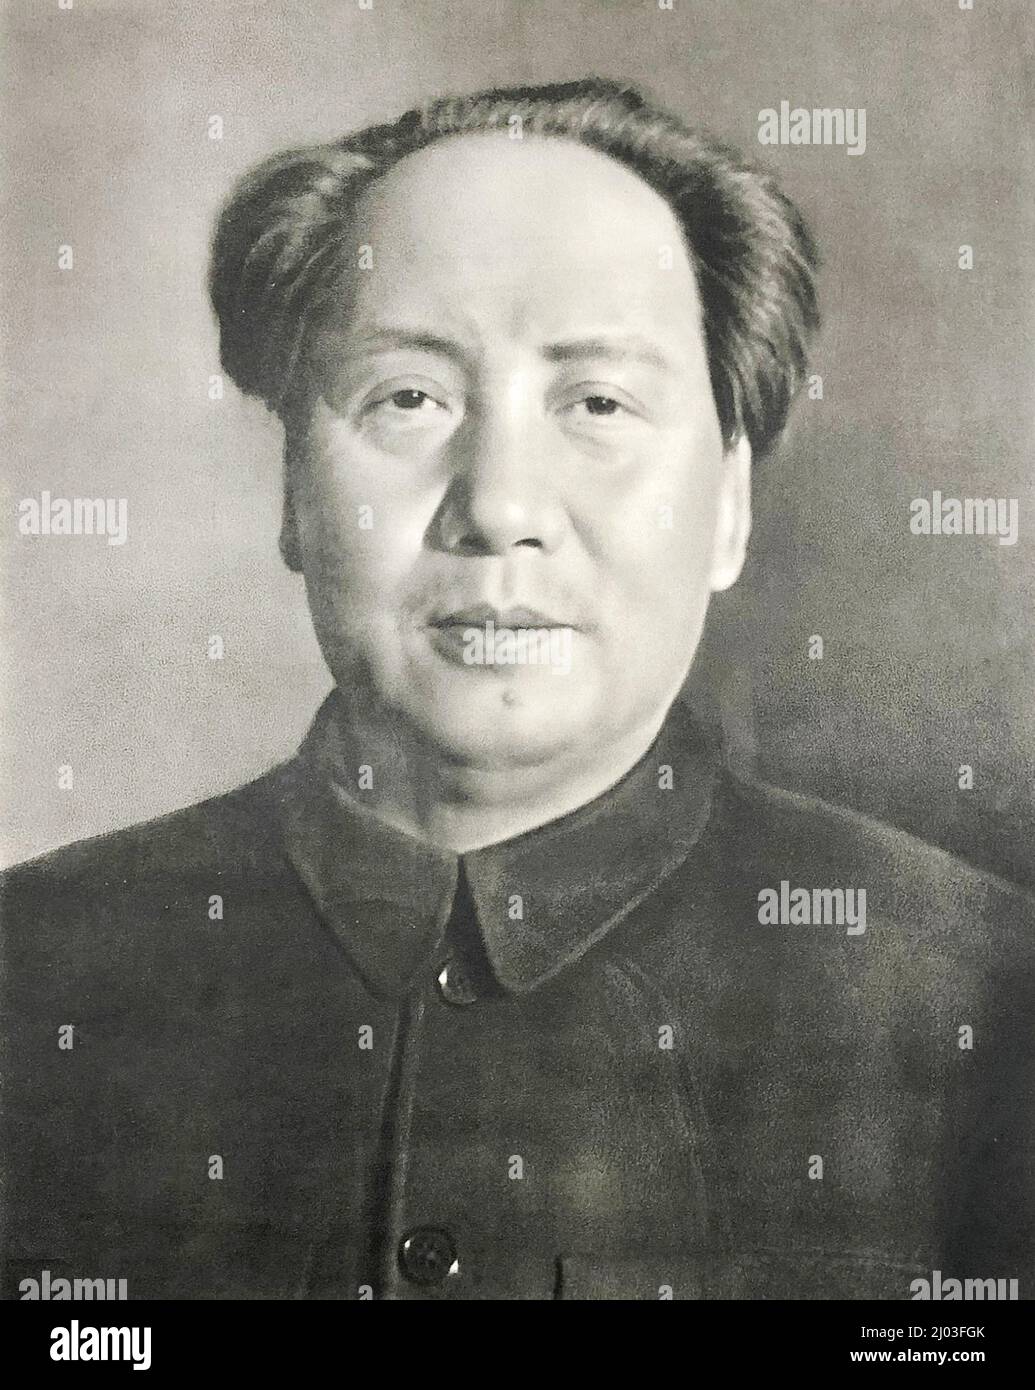 Photo portrait of Mao Zedong. Stock Photo